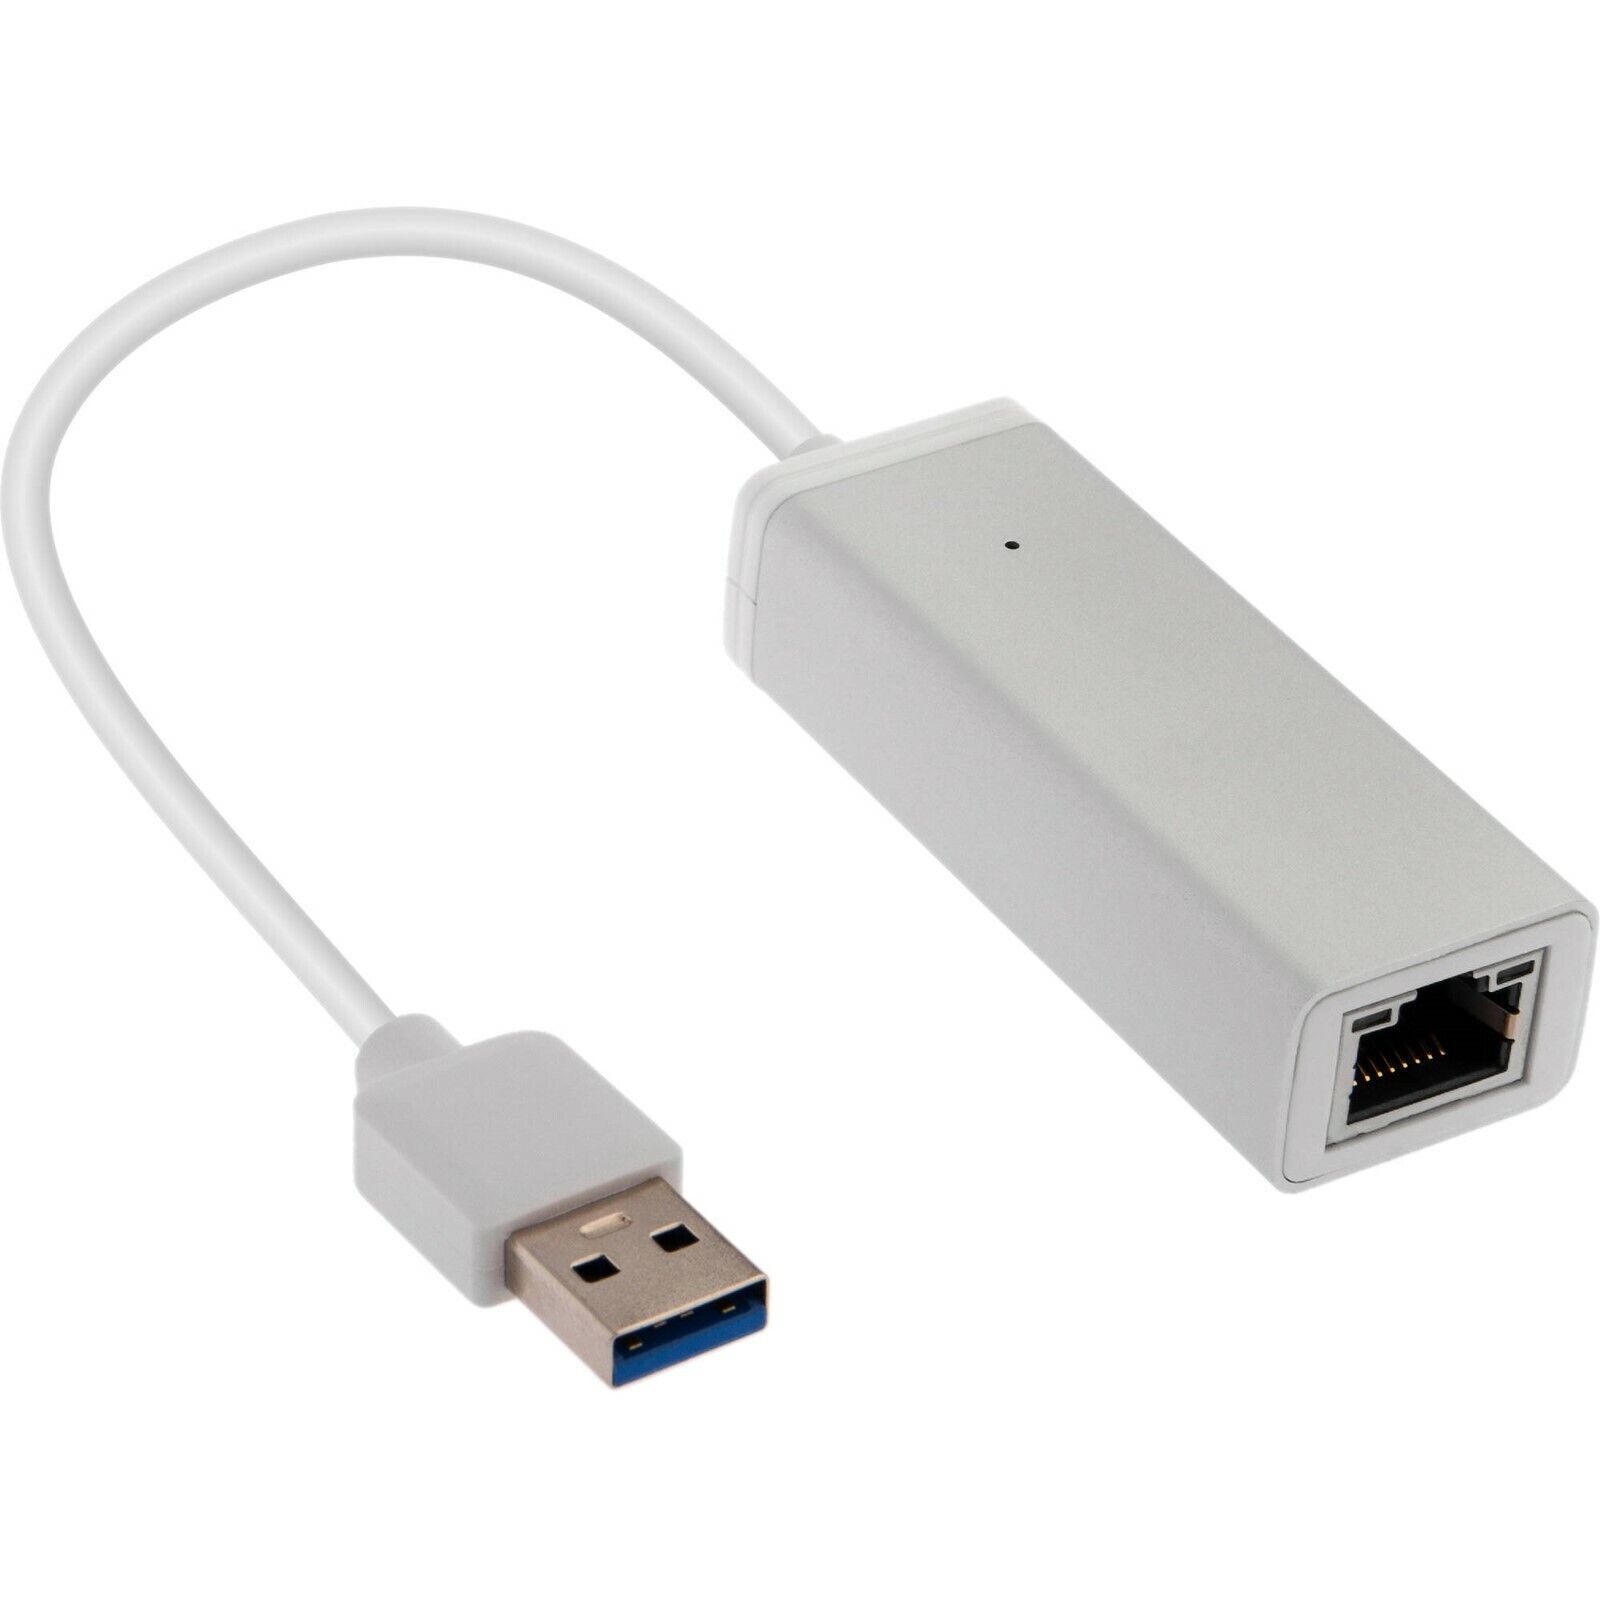 USB 2.0 to Ethernet Network LAN RJ45 Adapter for Windows 7/8/10/Vista/XP